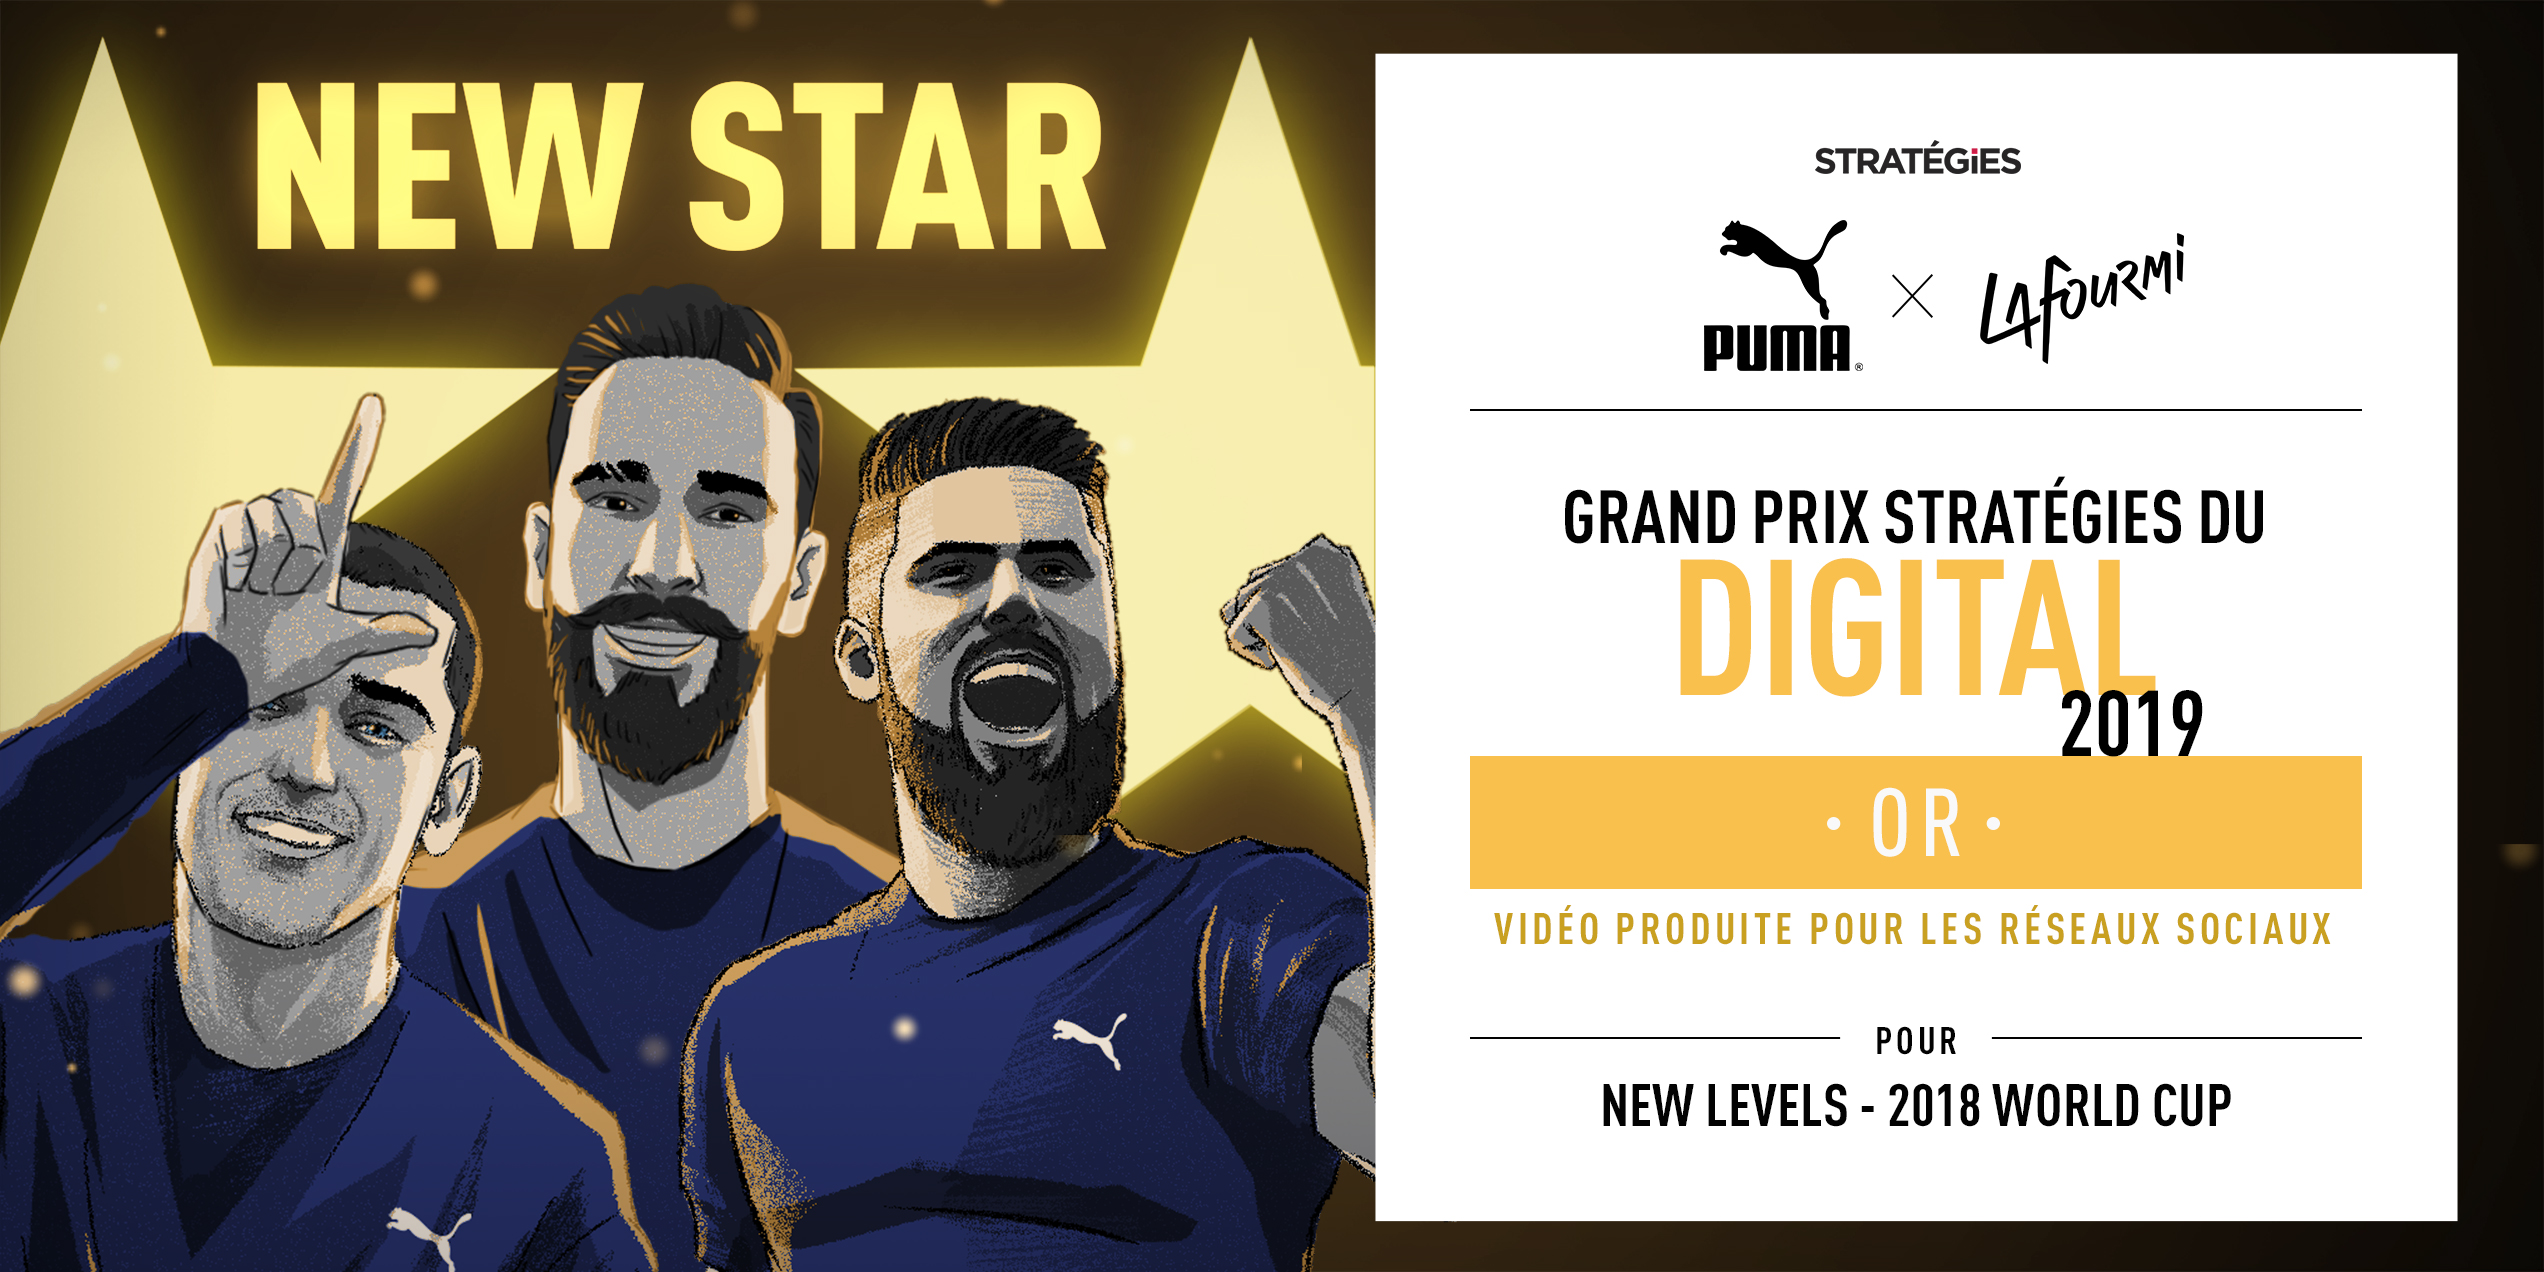 Presse_press_PUMA_LAFOURMI_remportent_Or_gold_Grand_Prix_Strategies_Digital_2019